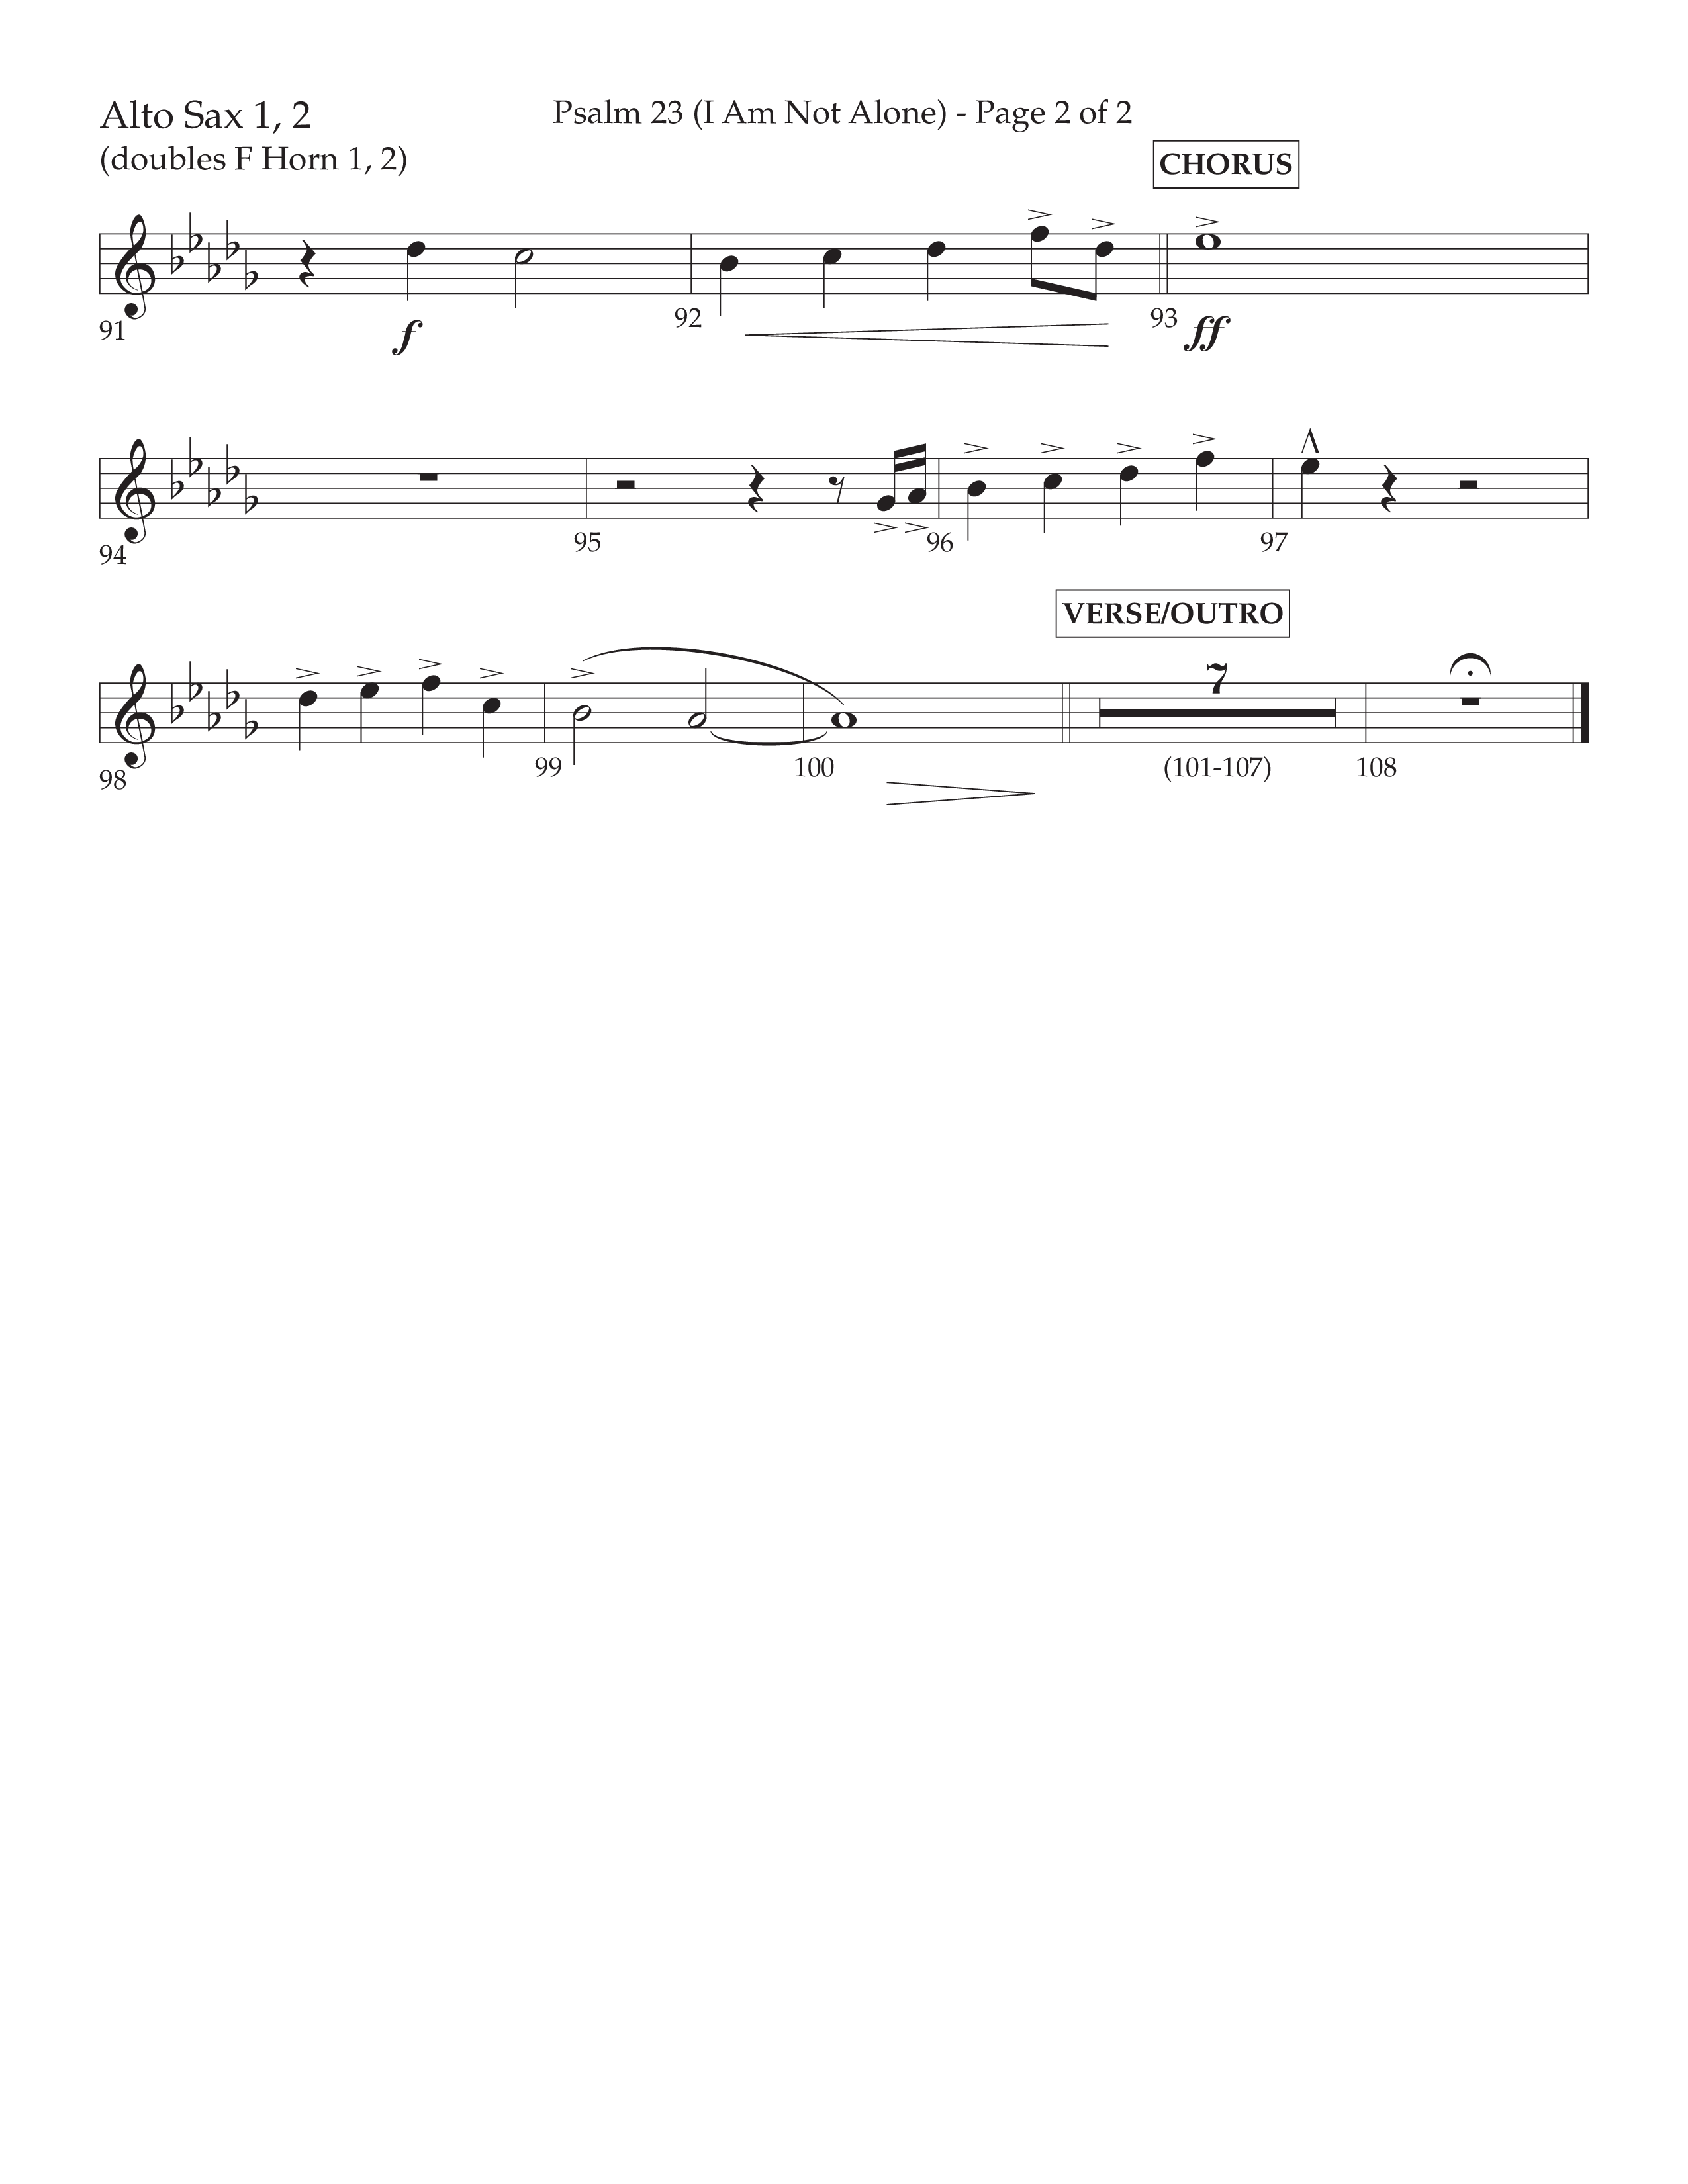 Psalm 23 (I Am Not Alone) (Choral Anthem SATB) Alto Sax 1/2 (Lifeway Choral / Arr. Cliff Duren)